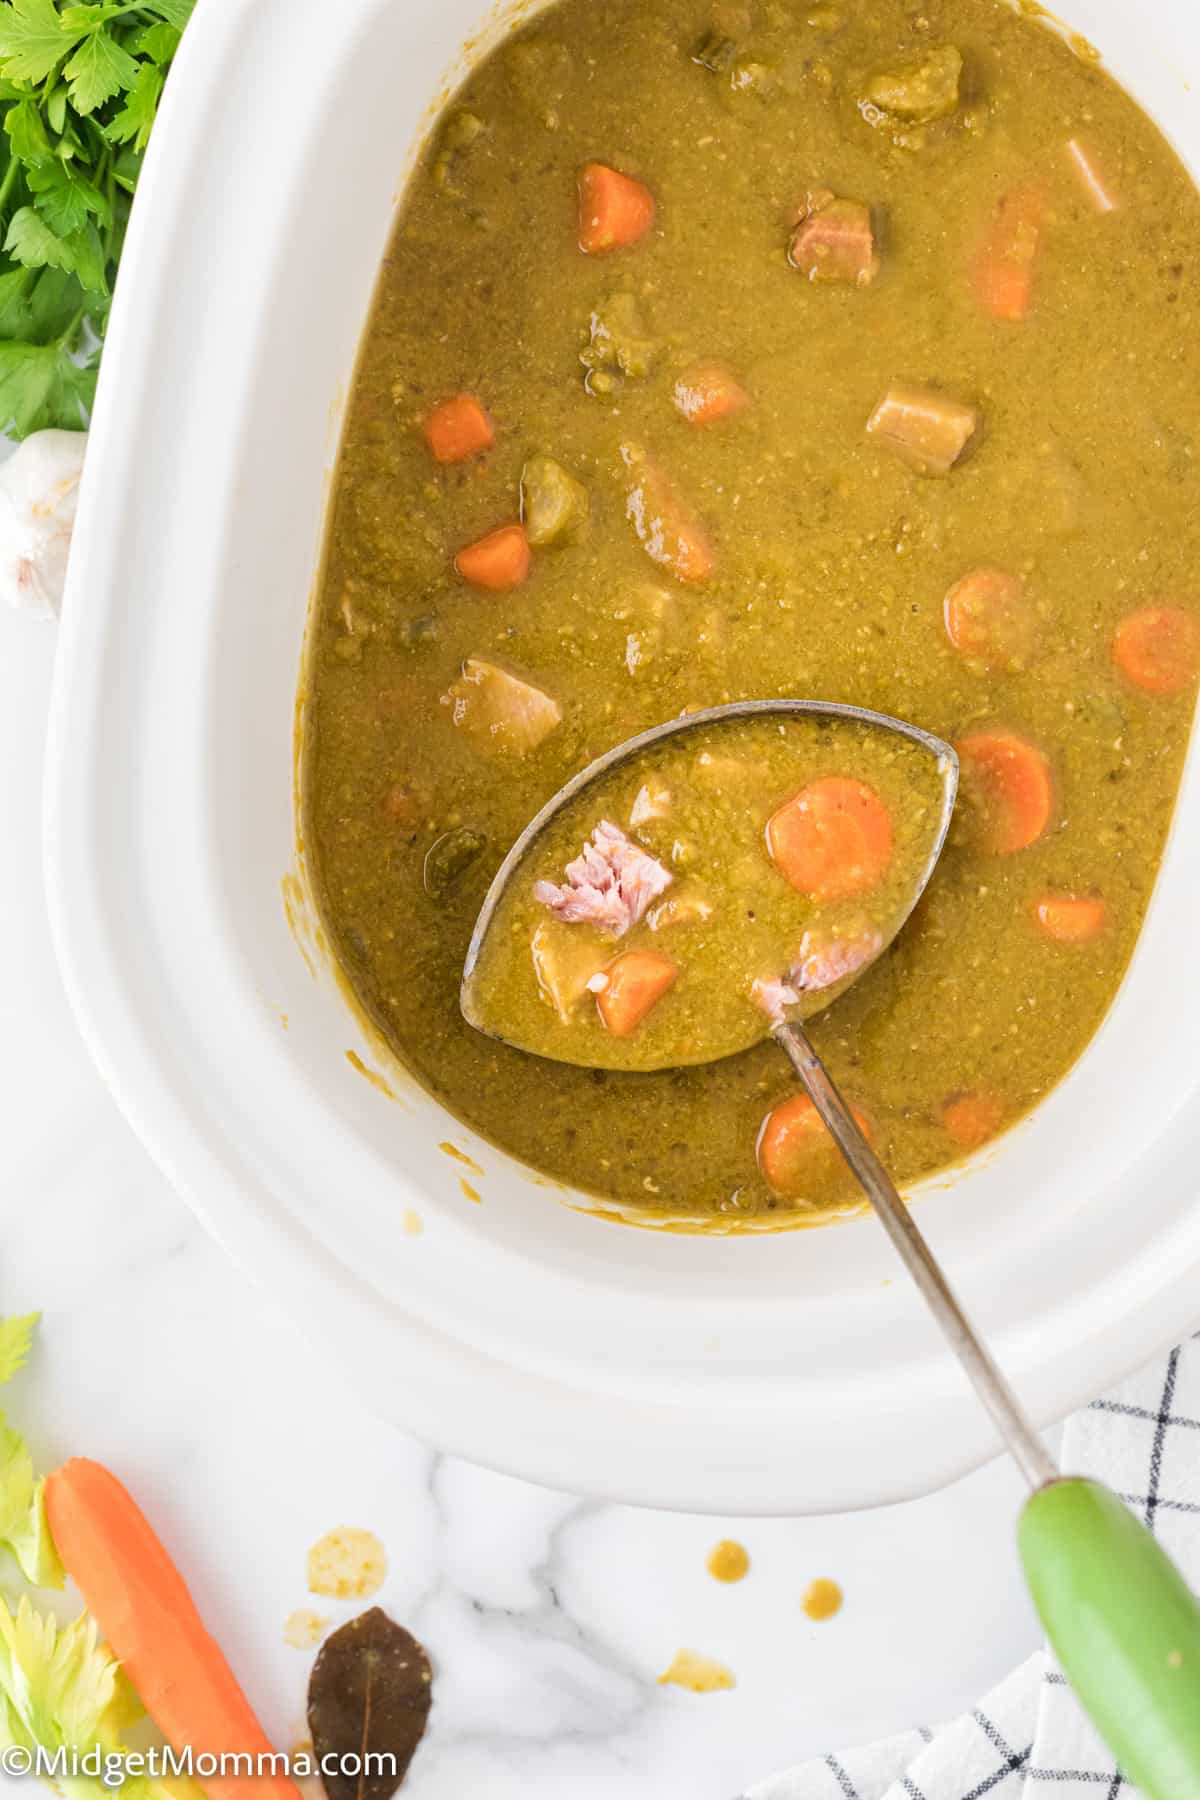 https://www.midgetmomma.com/wp-content/uploads/2022/01/Pea-Soup-with-Ham-Recipe-12.jpg